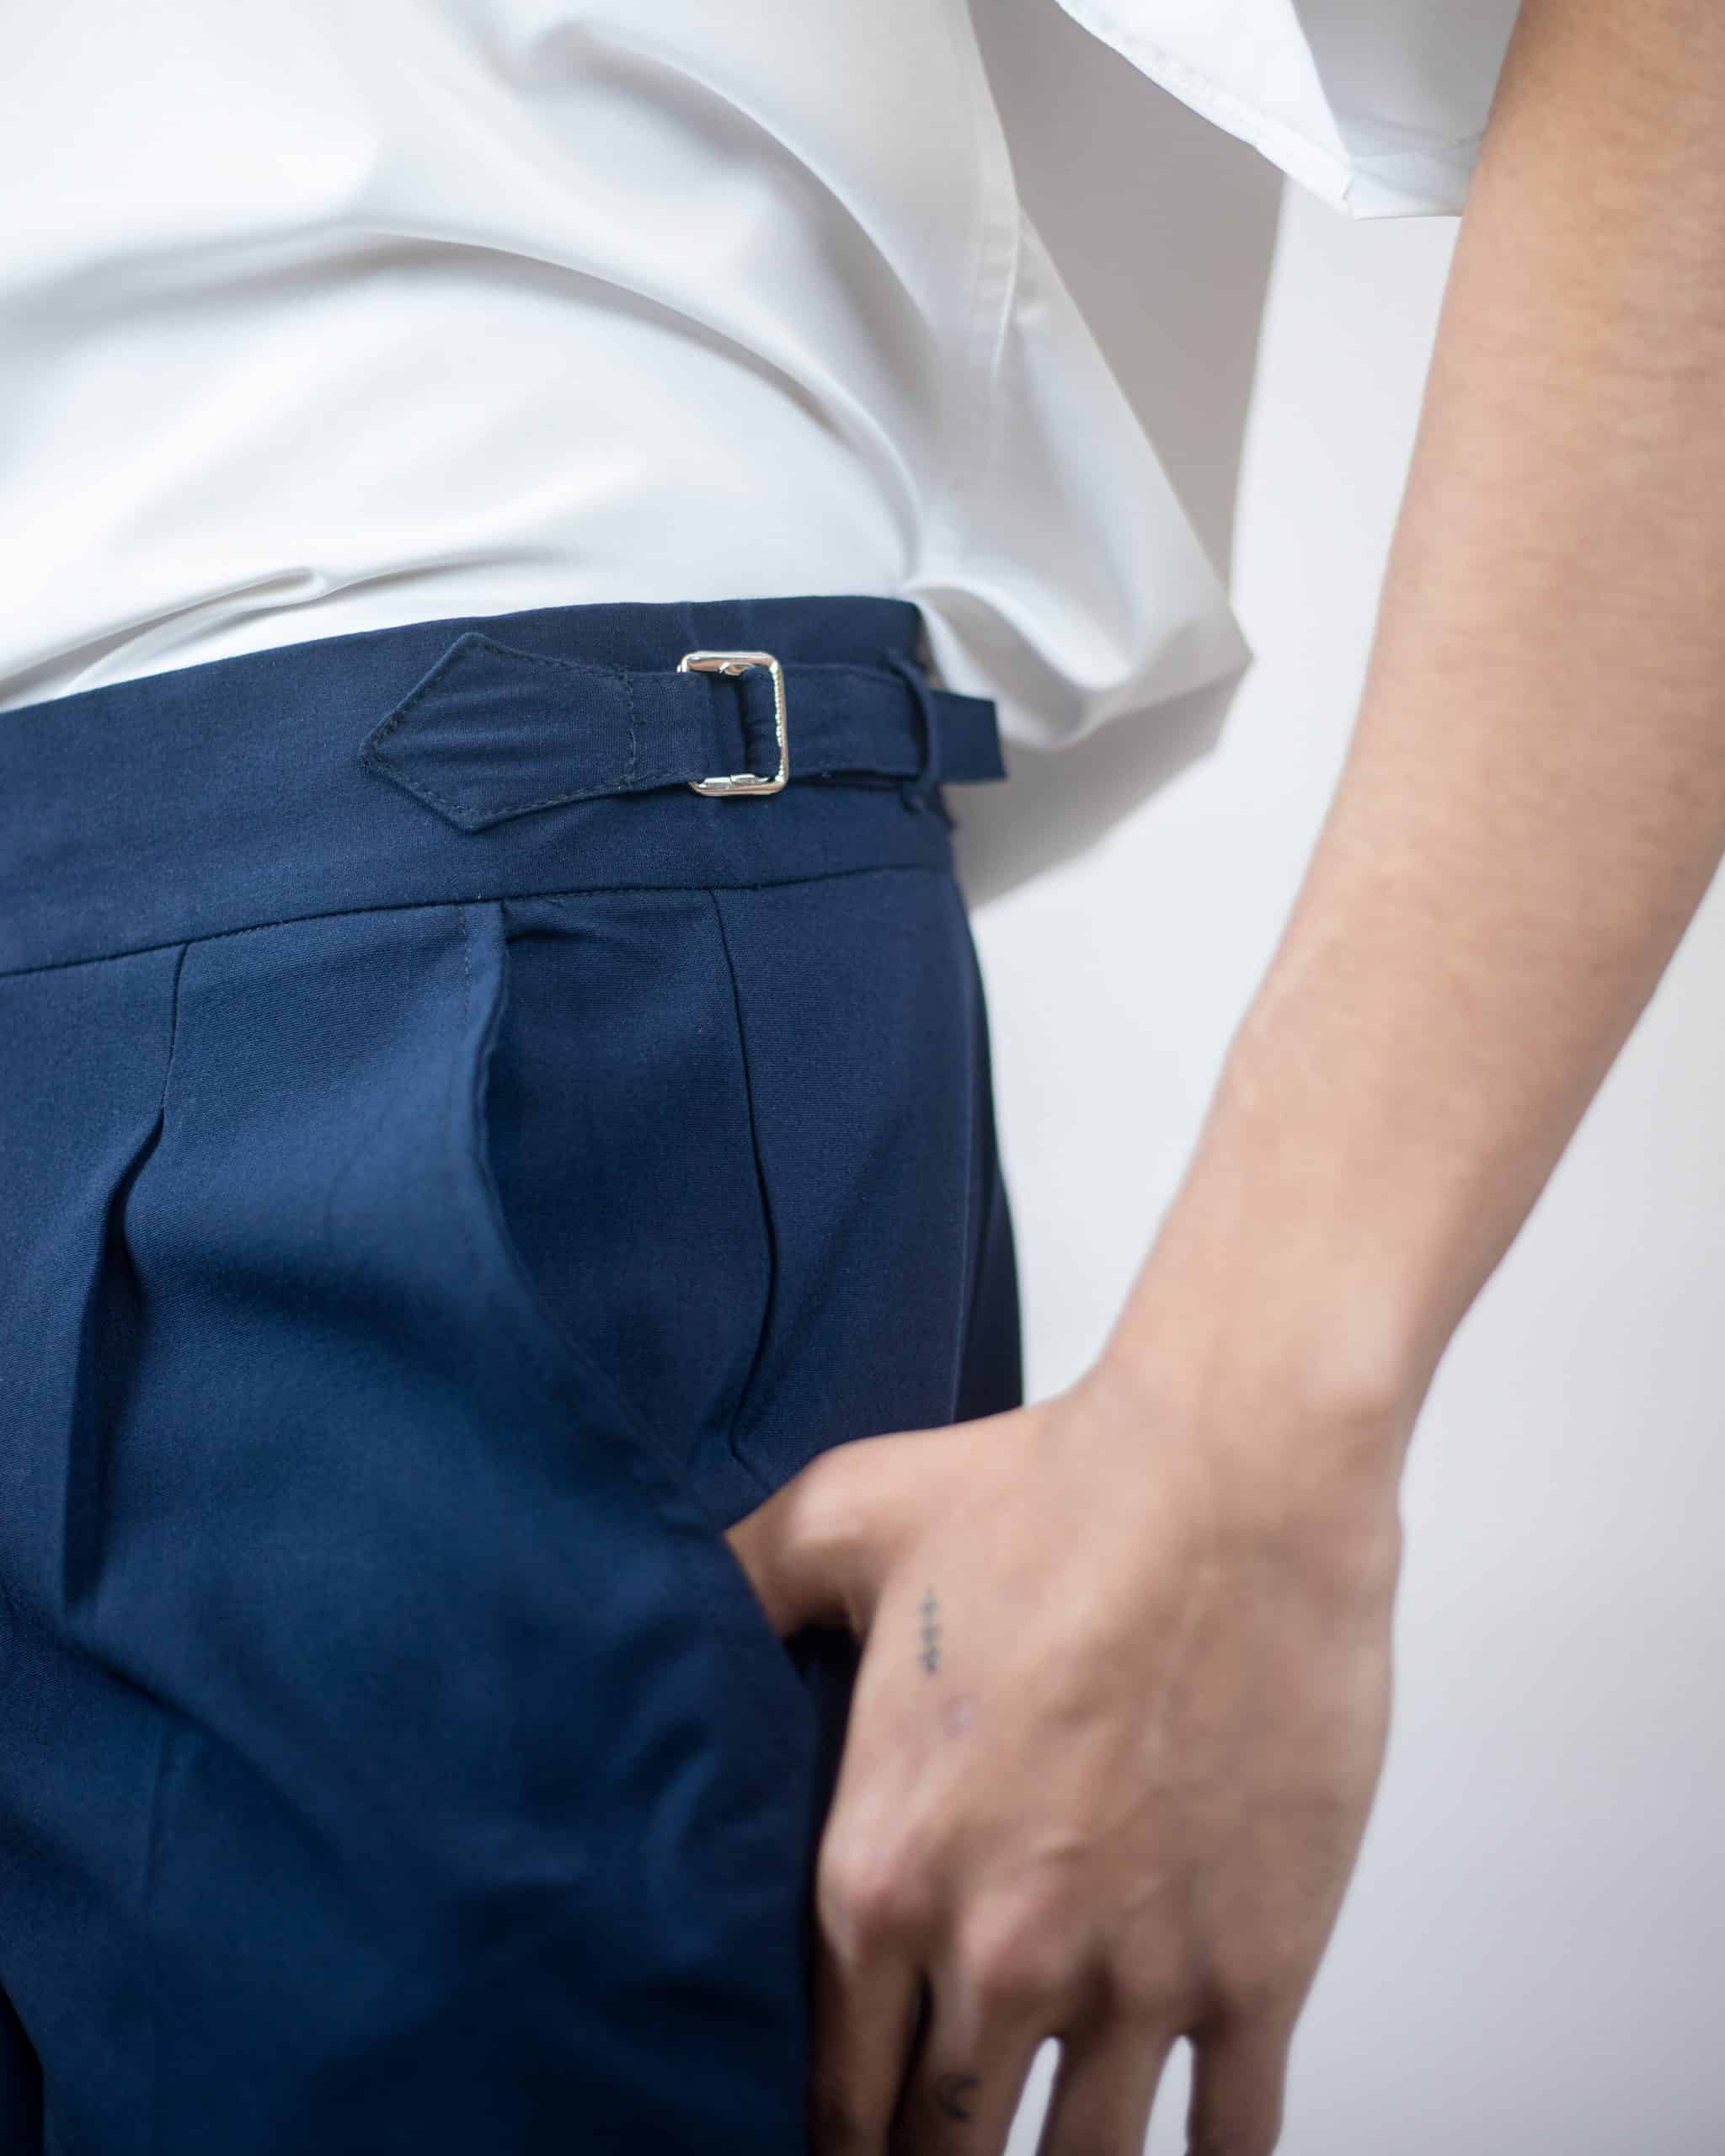 Men's Navy Blue Straight Fit Formal Gurkha Pants - Gorur Ghash